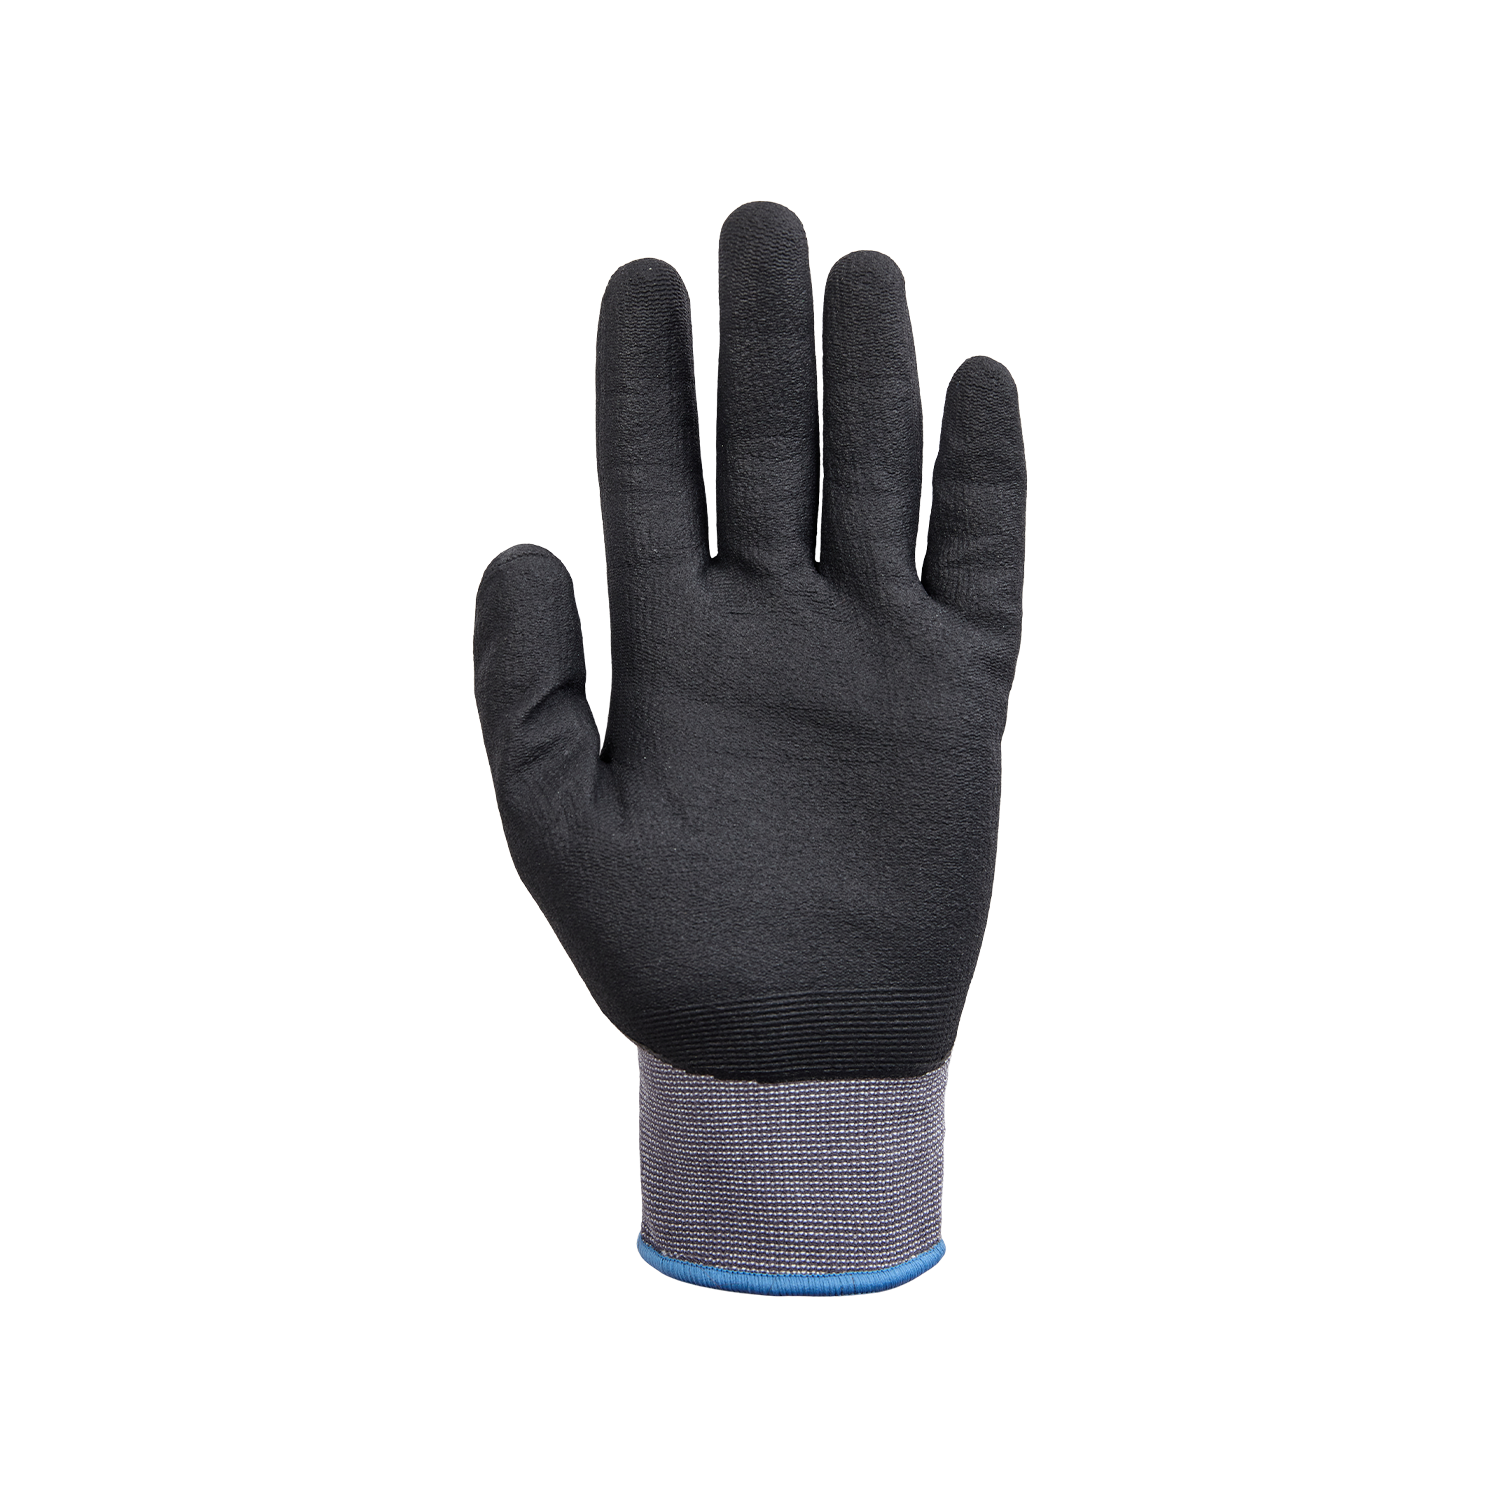 NORSE Flex Supreme assembly gloves size 6